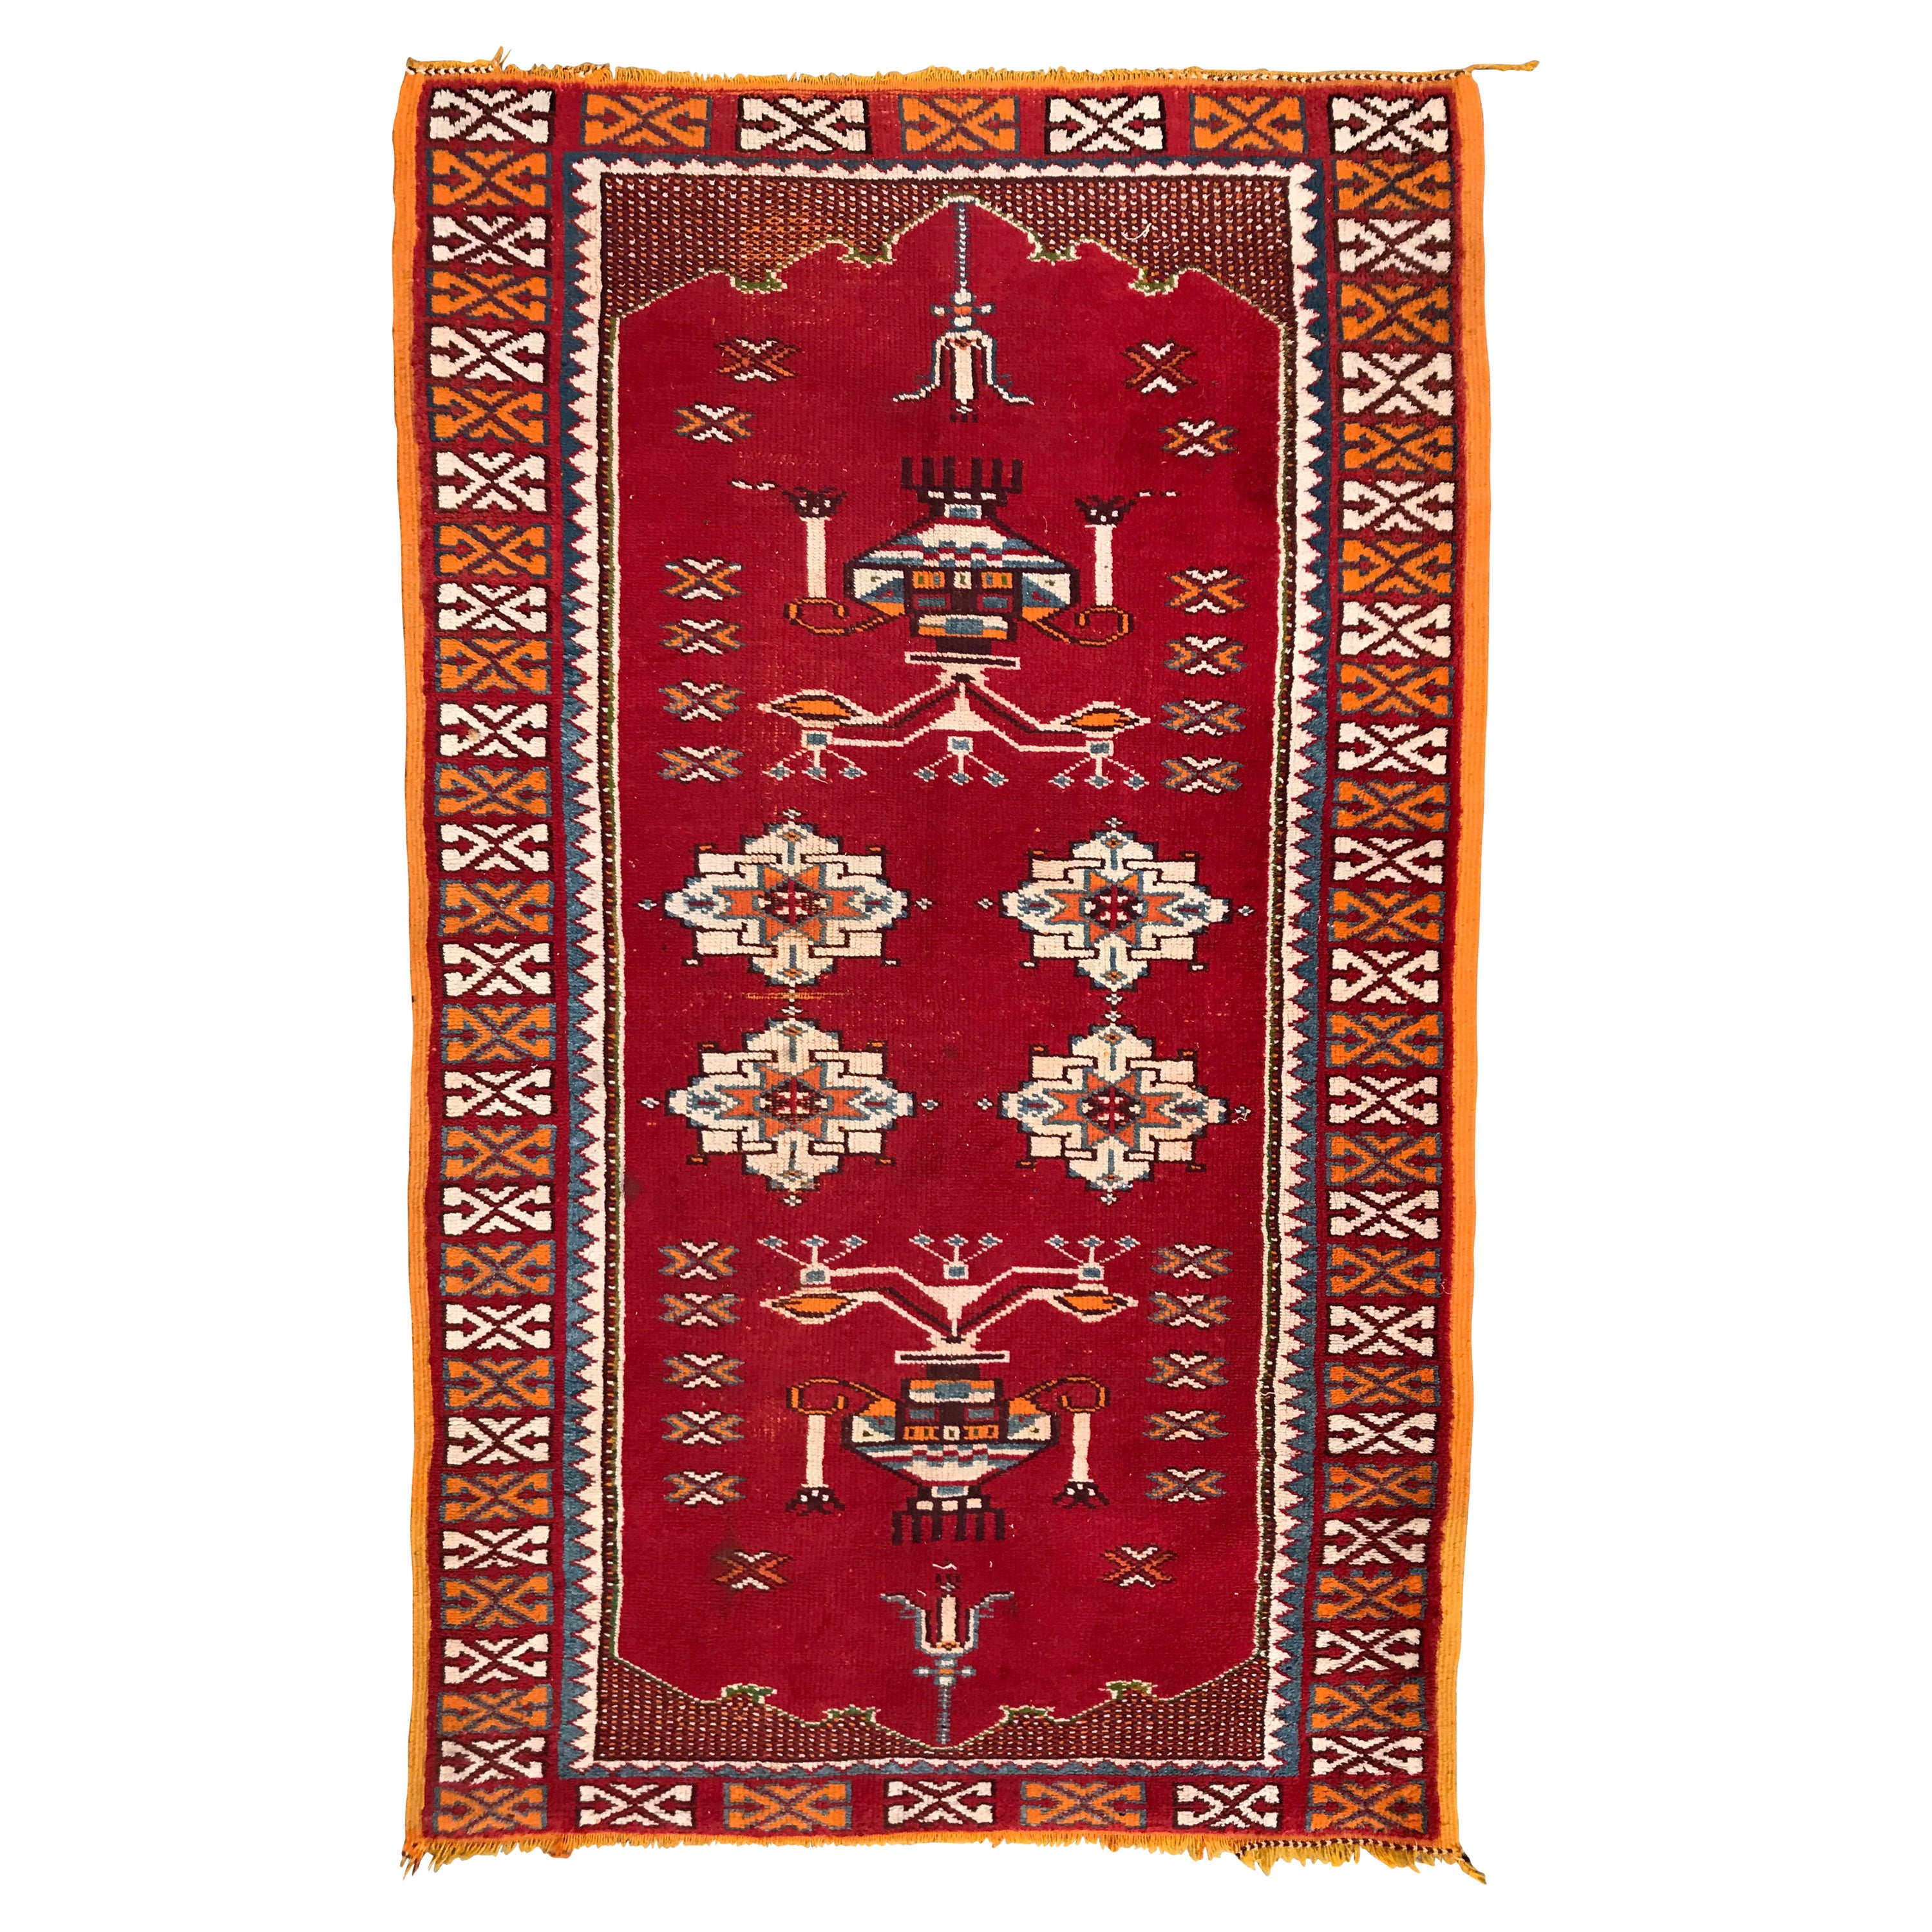 Bobyrug’s Pretty Vintage Moroccan Tribal Rug